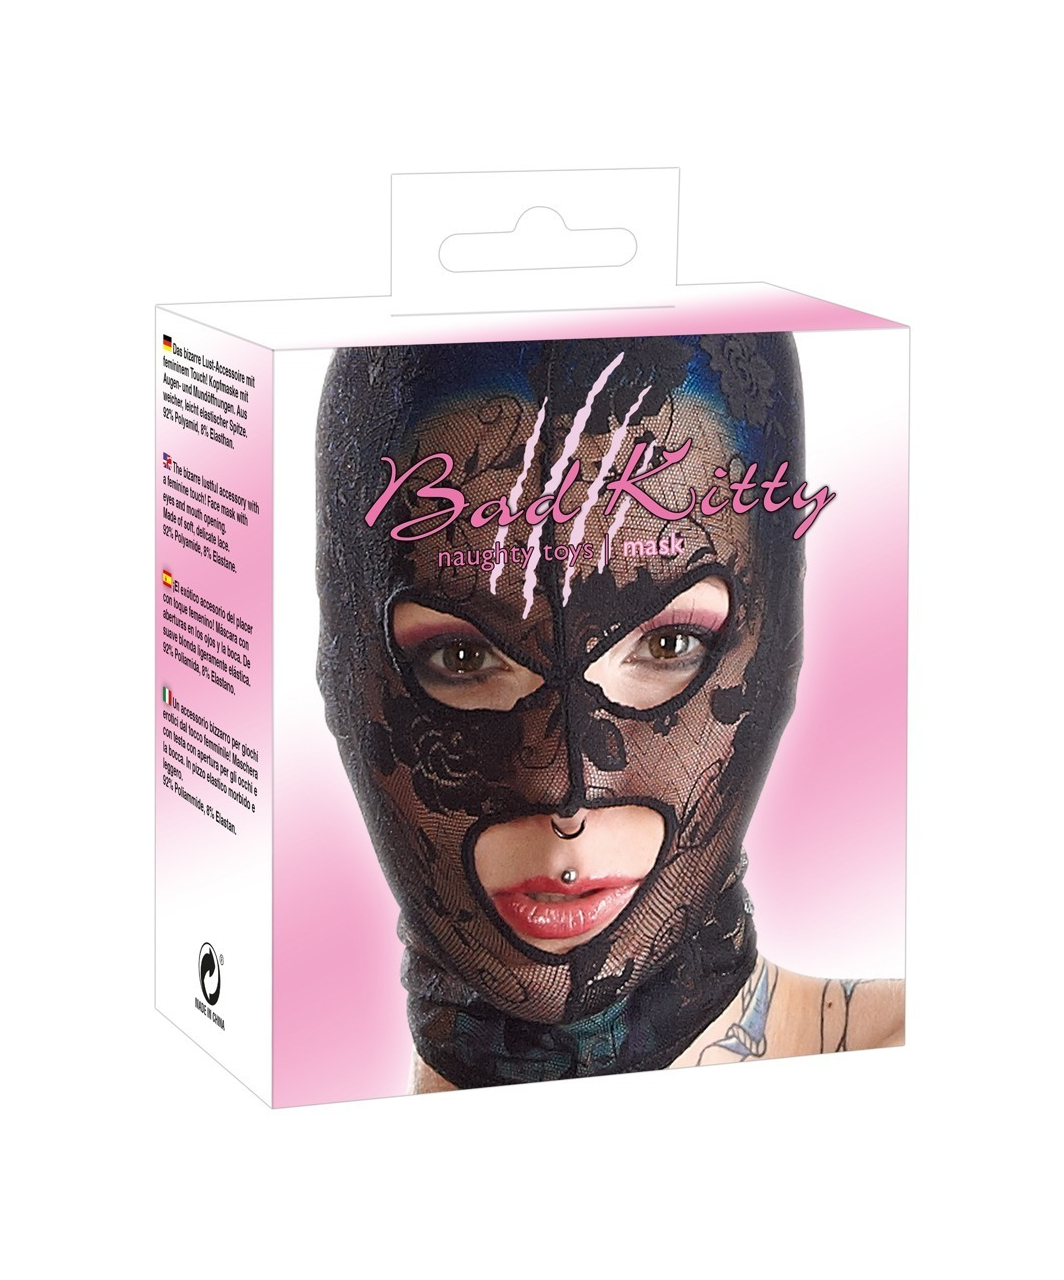 Bad Kitty black lace hood mask